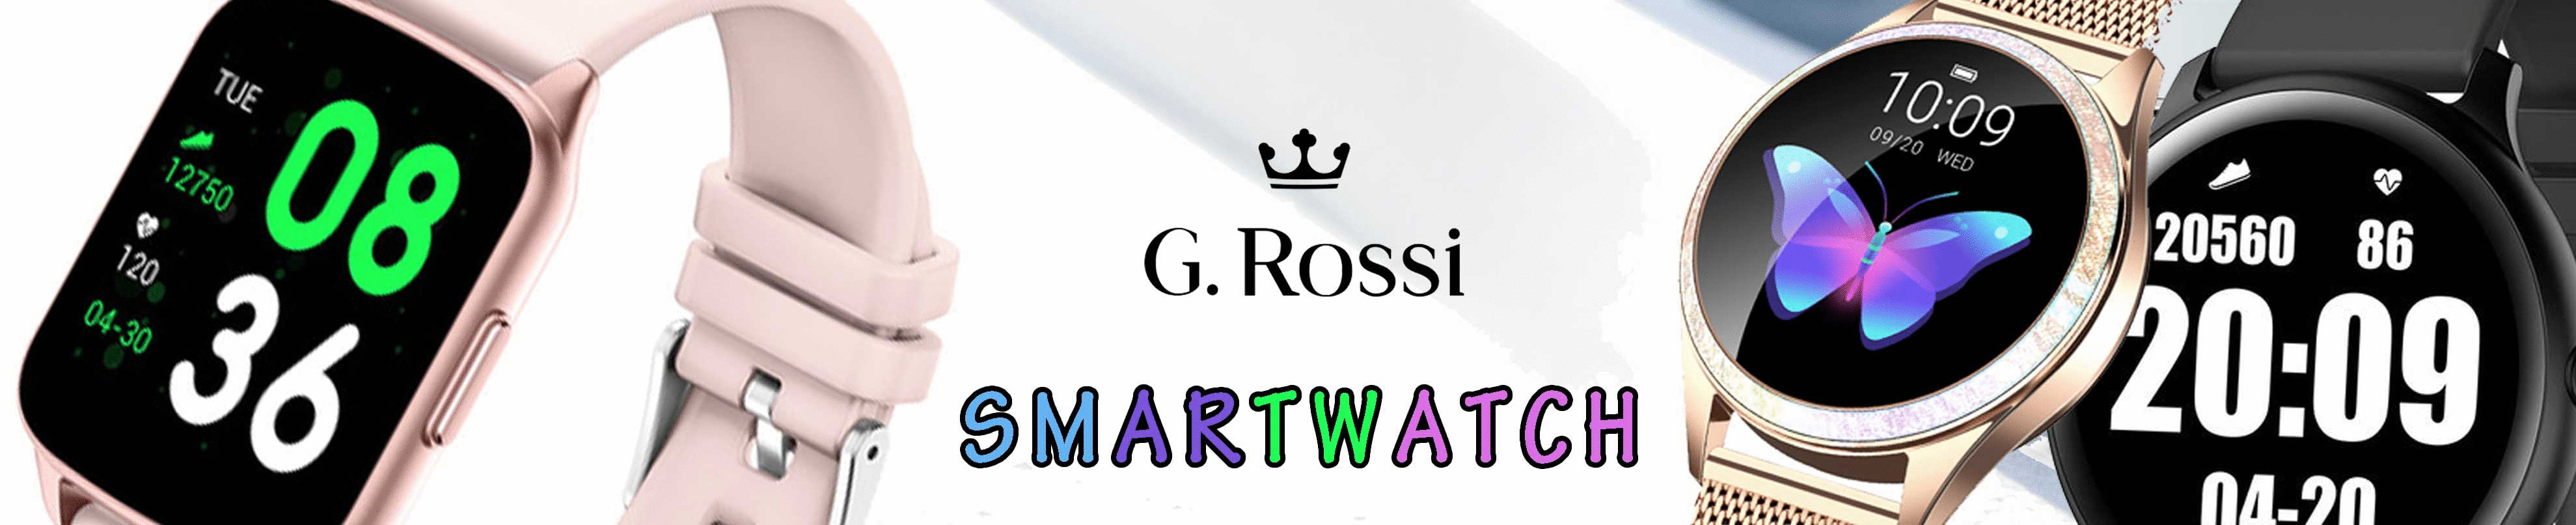 Smartwatche Gino Rossi